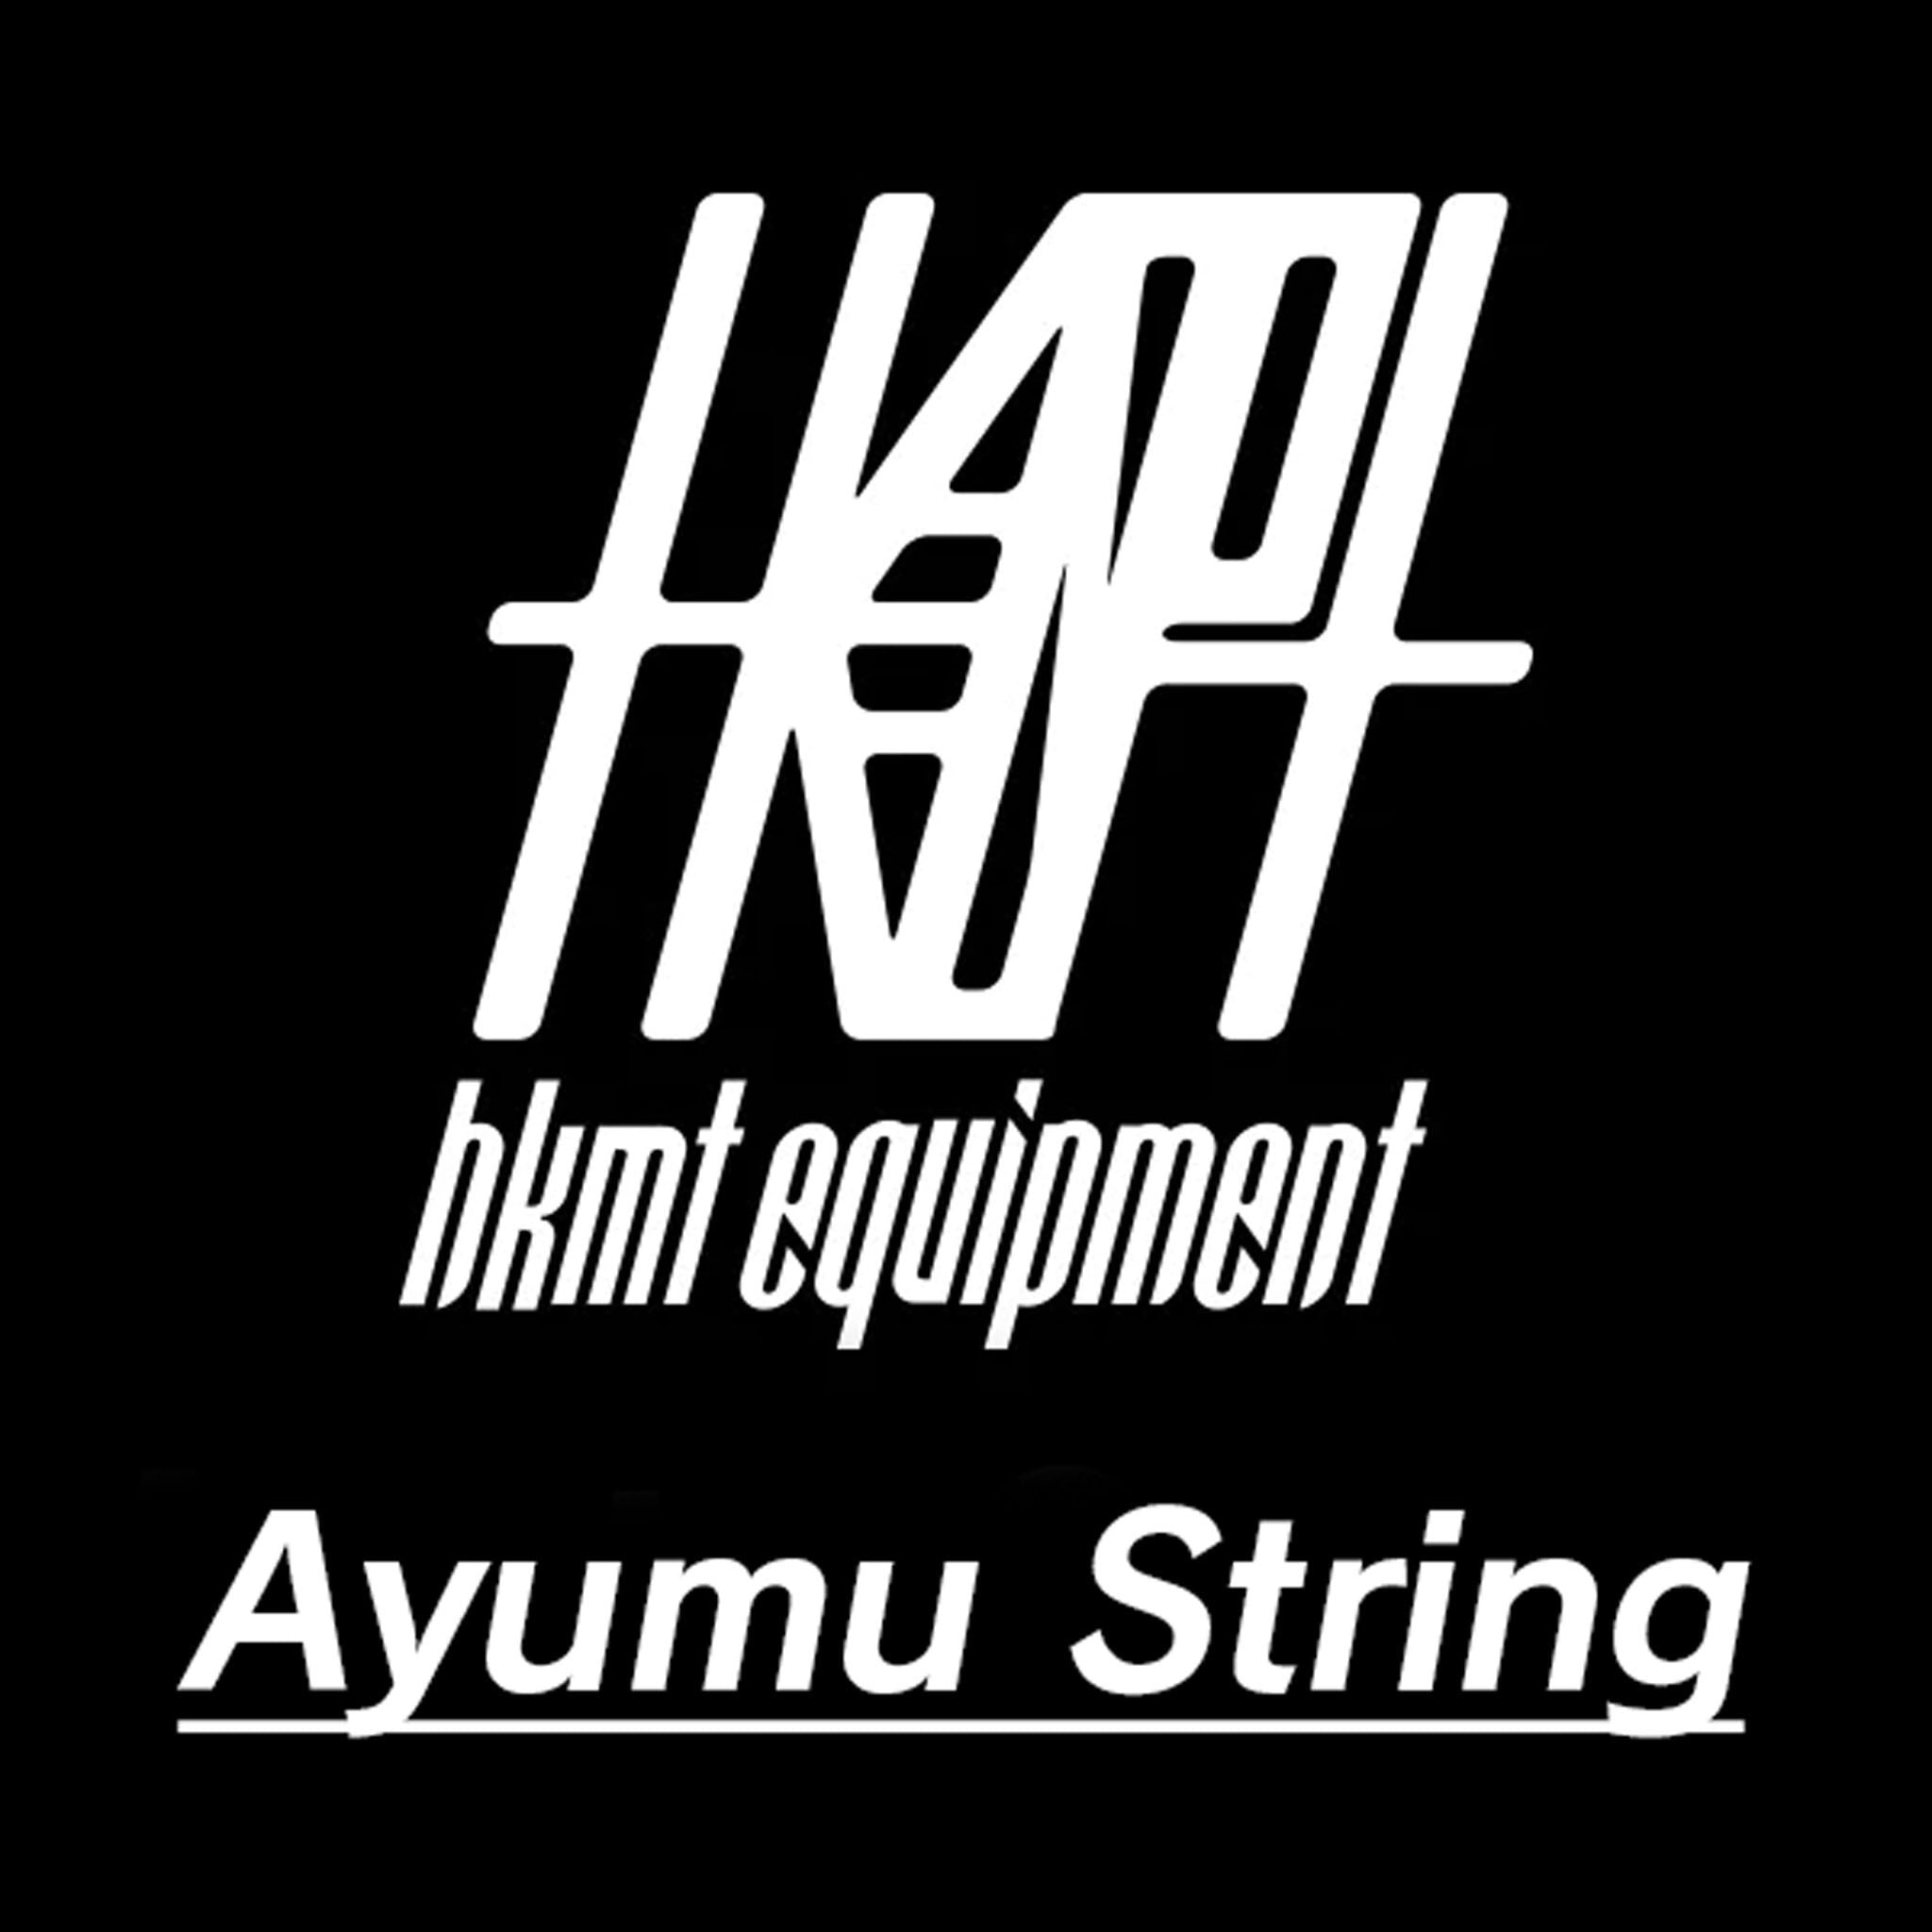 hkmt equipment Ayumu String x20